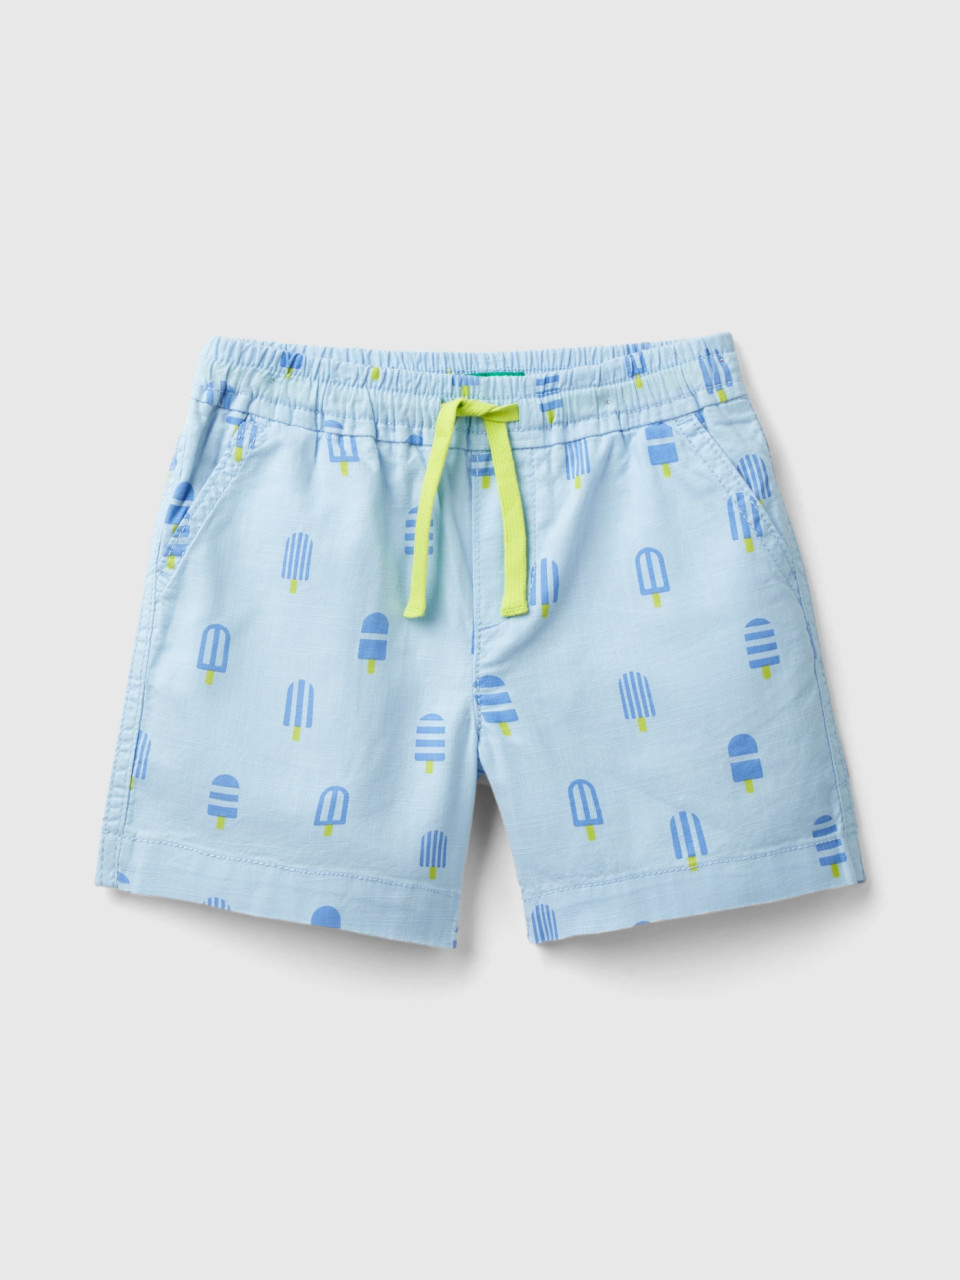 Benetton, Shorts With Ice Cream Print, Sky Blue, Kids